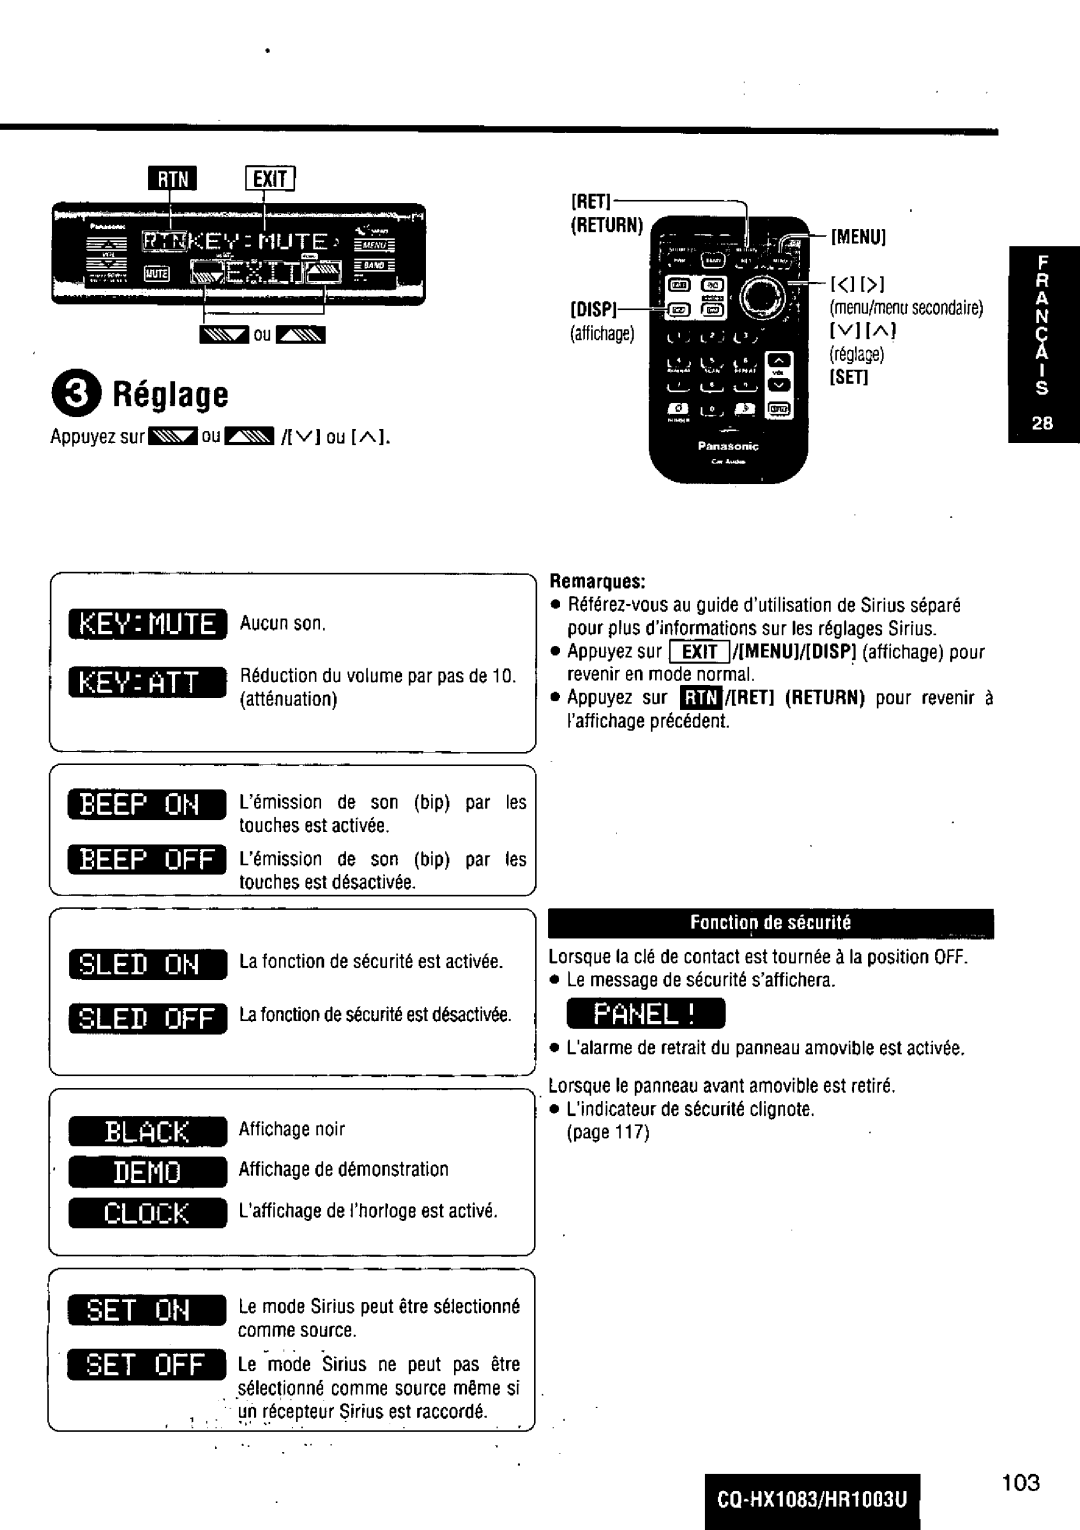 Panasonic CQ-HR1003U manual 